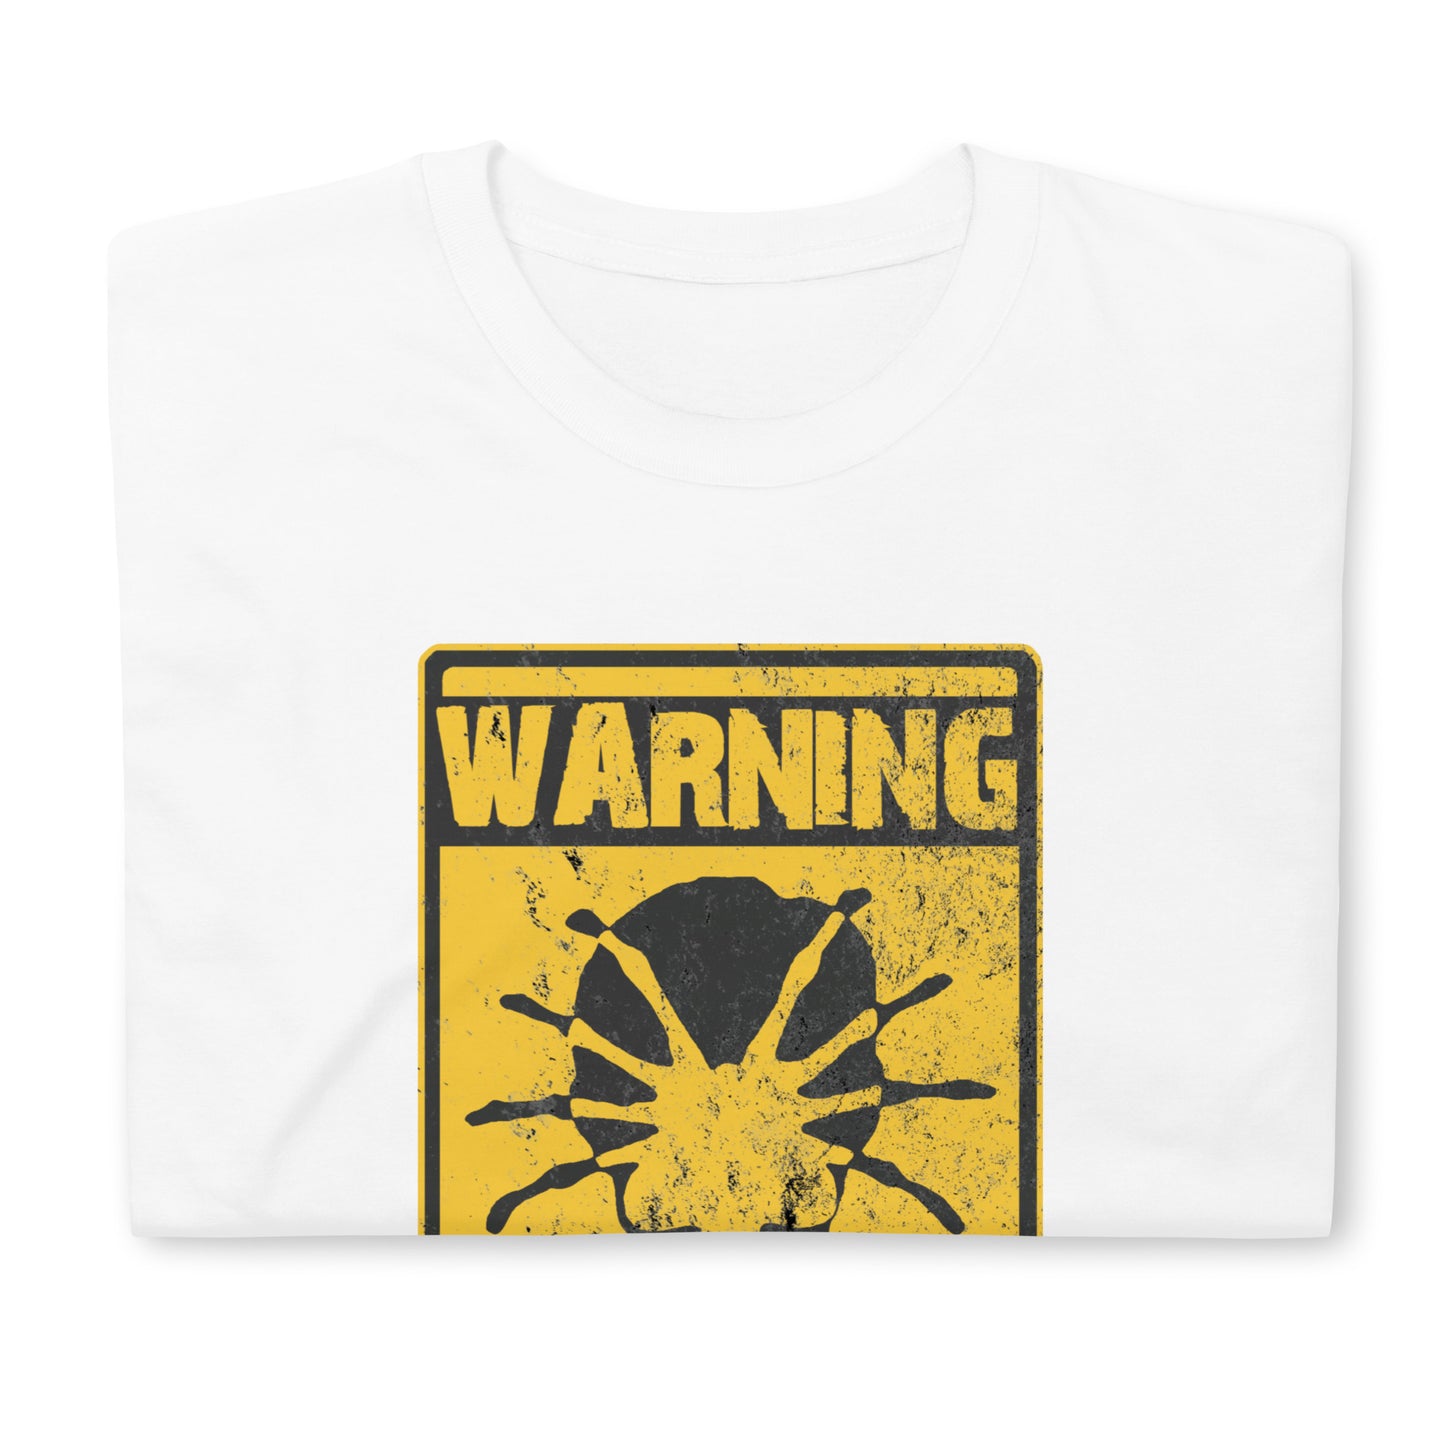 Facehugger Warning T-Shirt